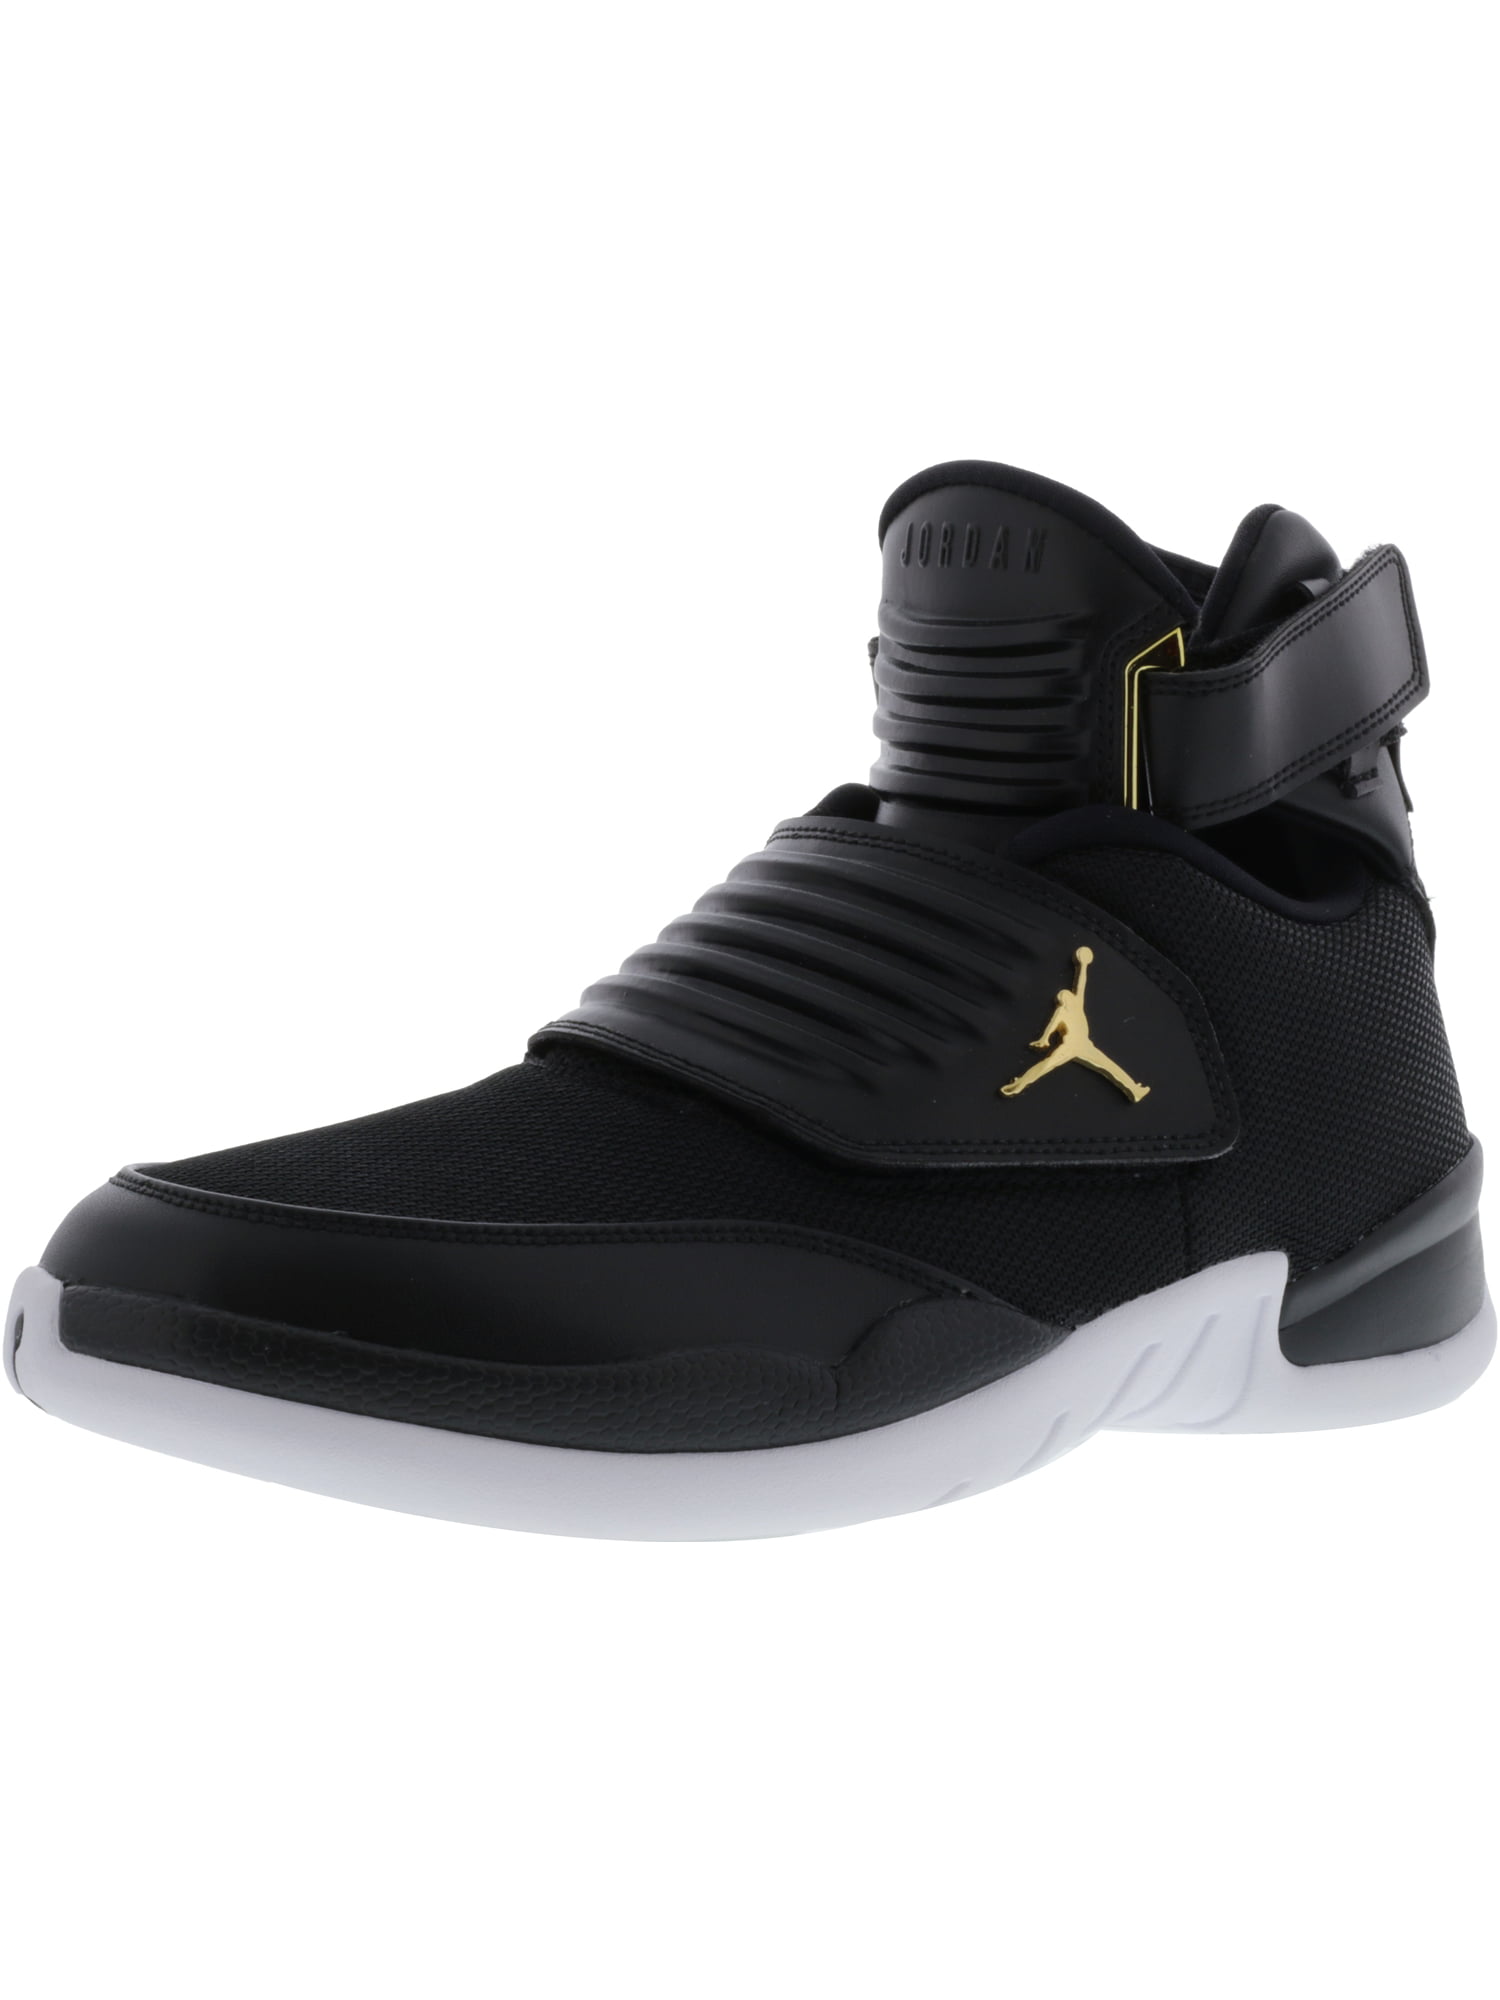 Bull bison Technology Nike Men's Jordan Generation 23 Black / - White Ankle-High Basketball Shoe  8M - Walmart.com